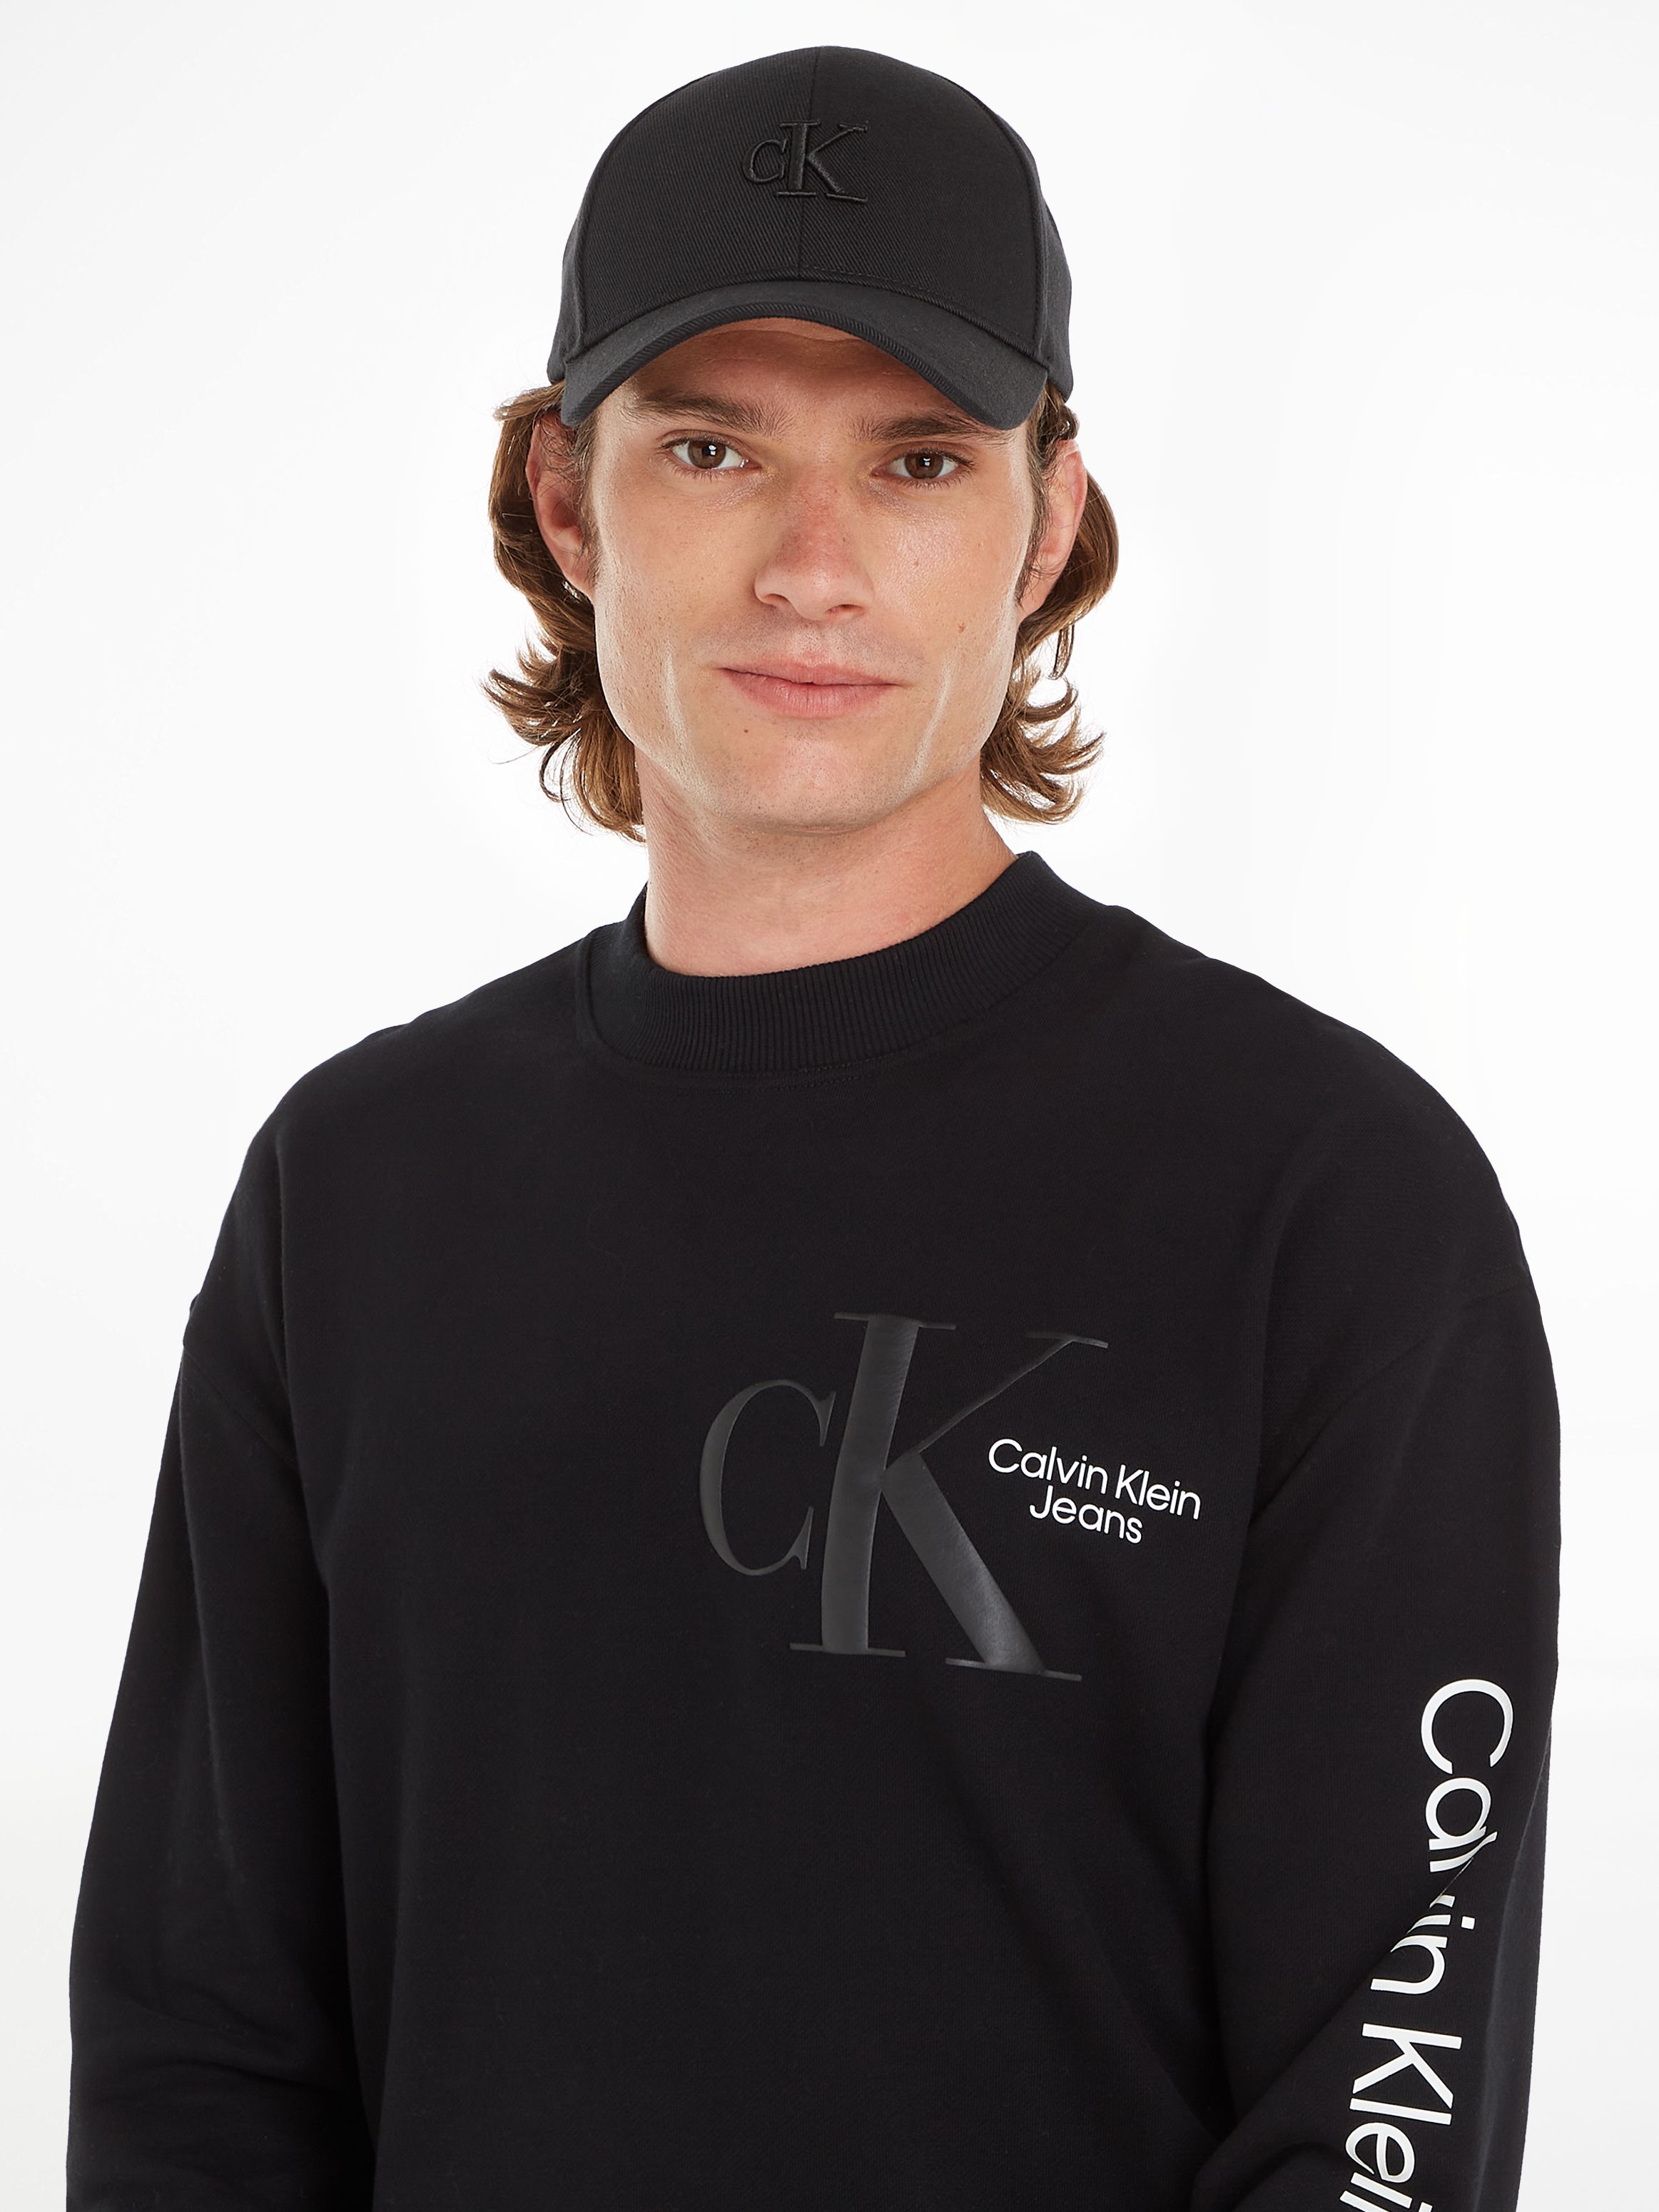 Calvin Klein Jeans New Archive Cap